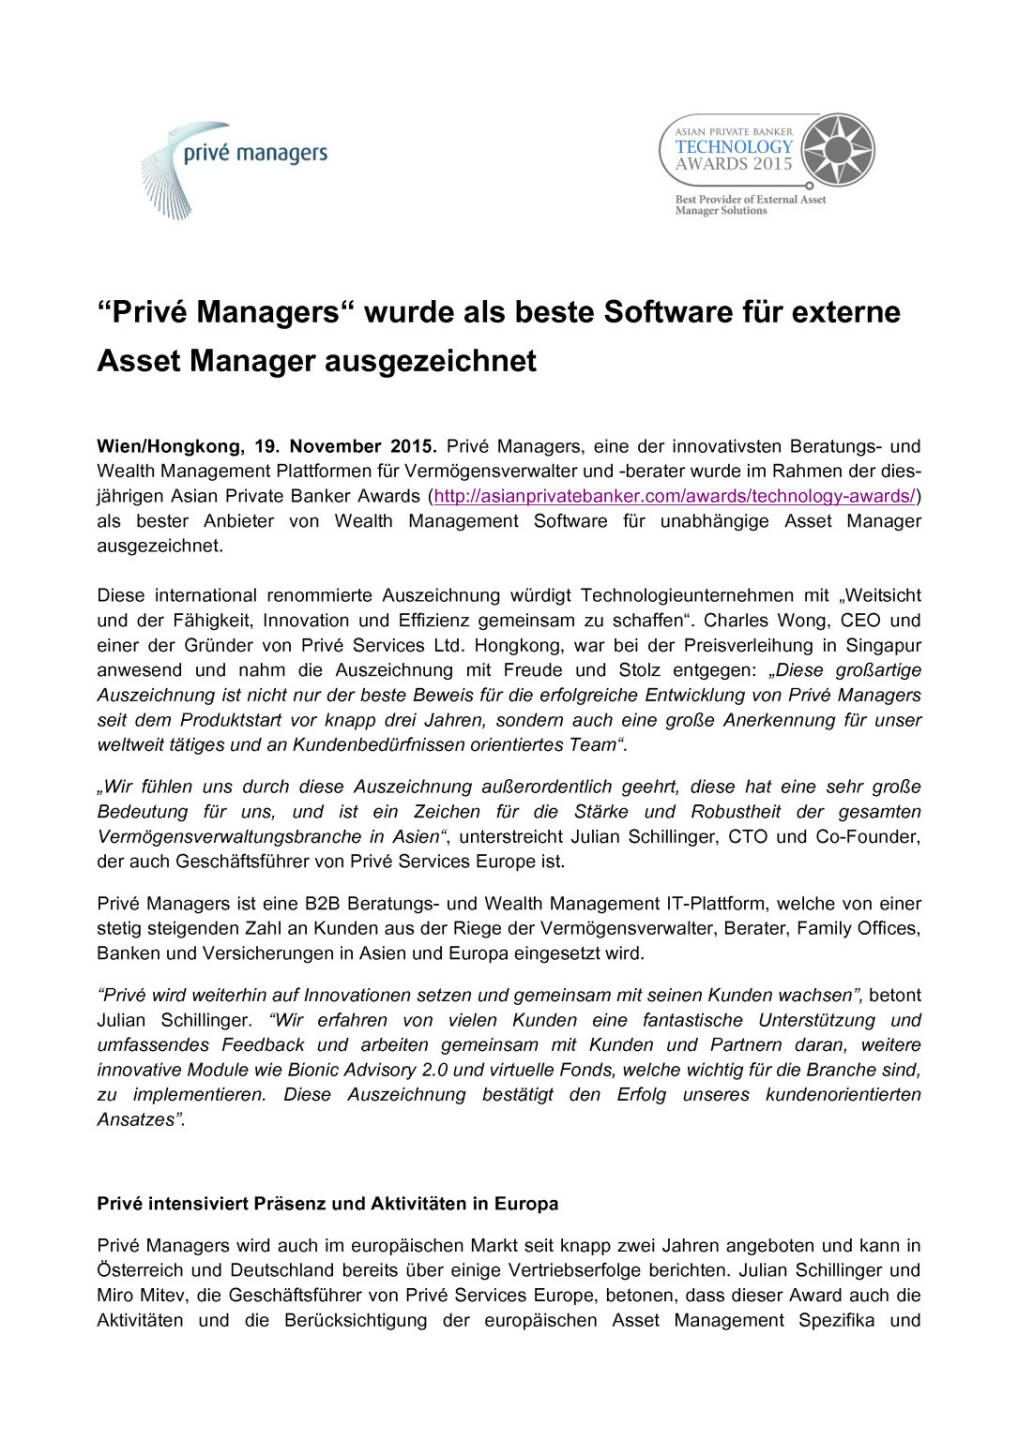 Prive Managers als beste Software für externe Asset Manager prämiert, Seite 1/2, komplettes Dokument unter http://boerse-social.com/static/uploads/file_486_prive_managers_als_beste_software_fur_externe_asset_manager_pramiert.pdf